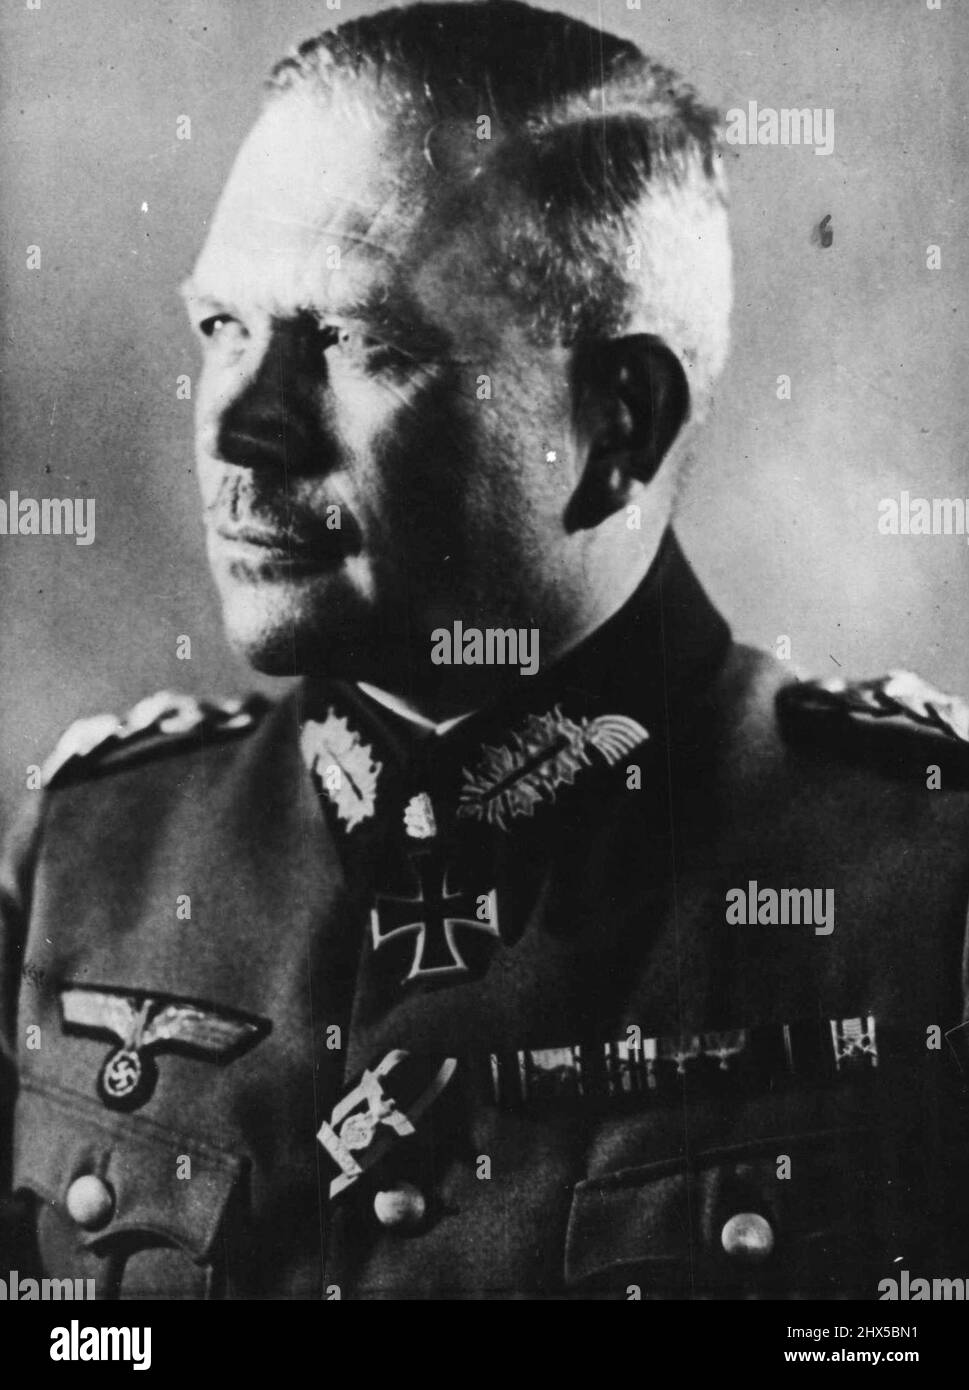 Former German Army Chiefs. General Guderian. November 9, 1951. (Photo by Camera Press). Stock Photo